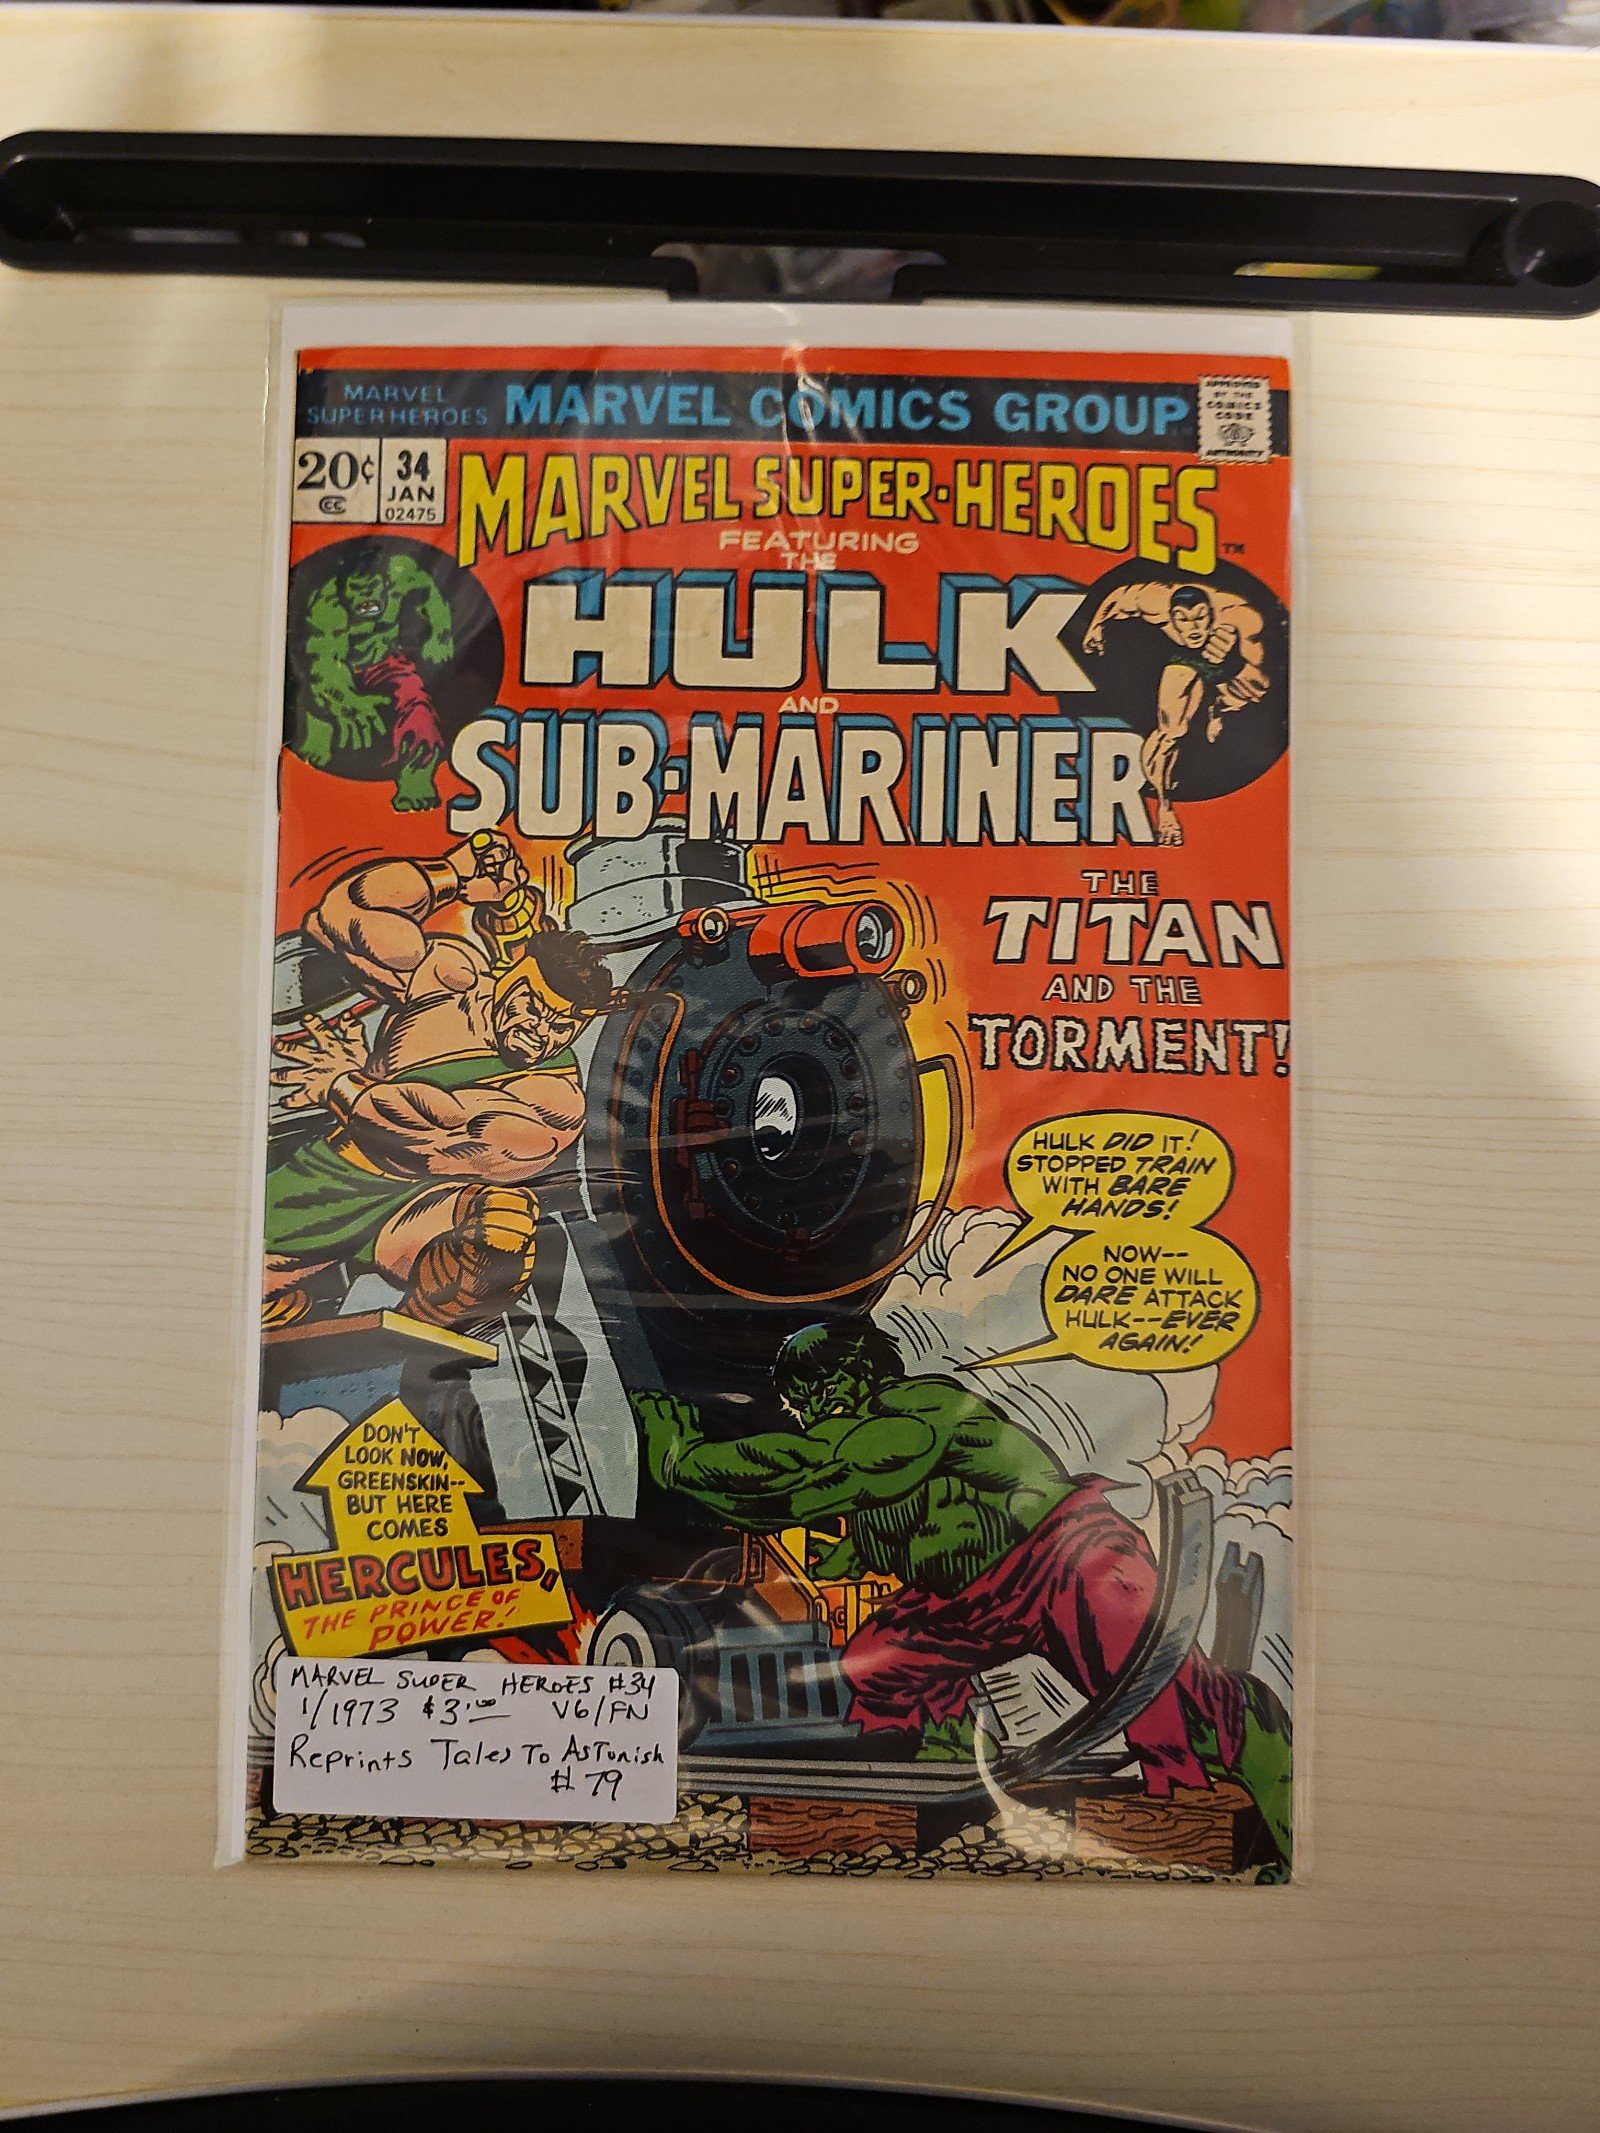 Marvel Super-Heroes #34 1/1973 VG/FN REPRINTS TALES TO ASTONISH #79 OtscPd5J8